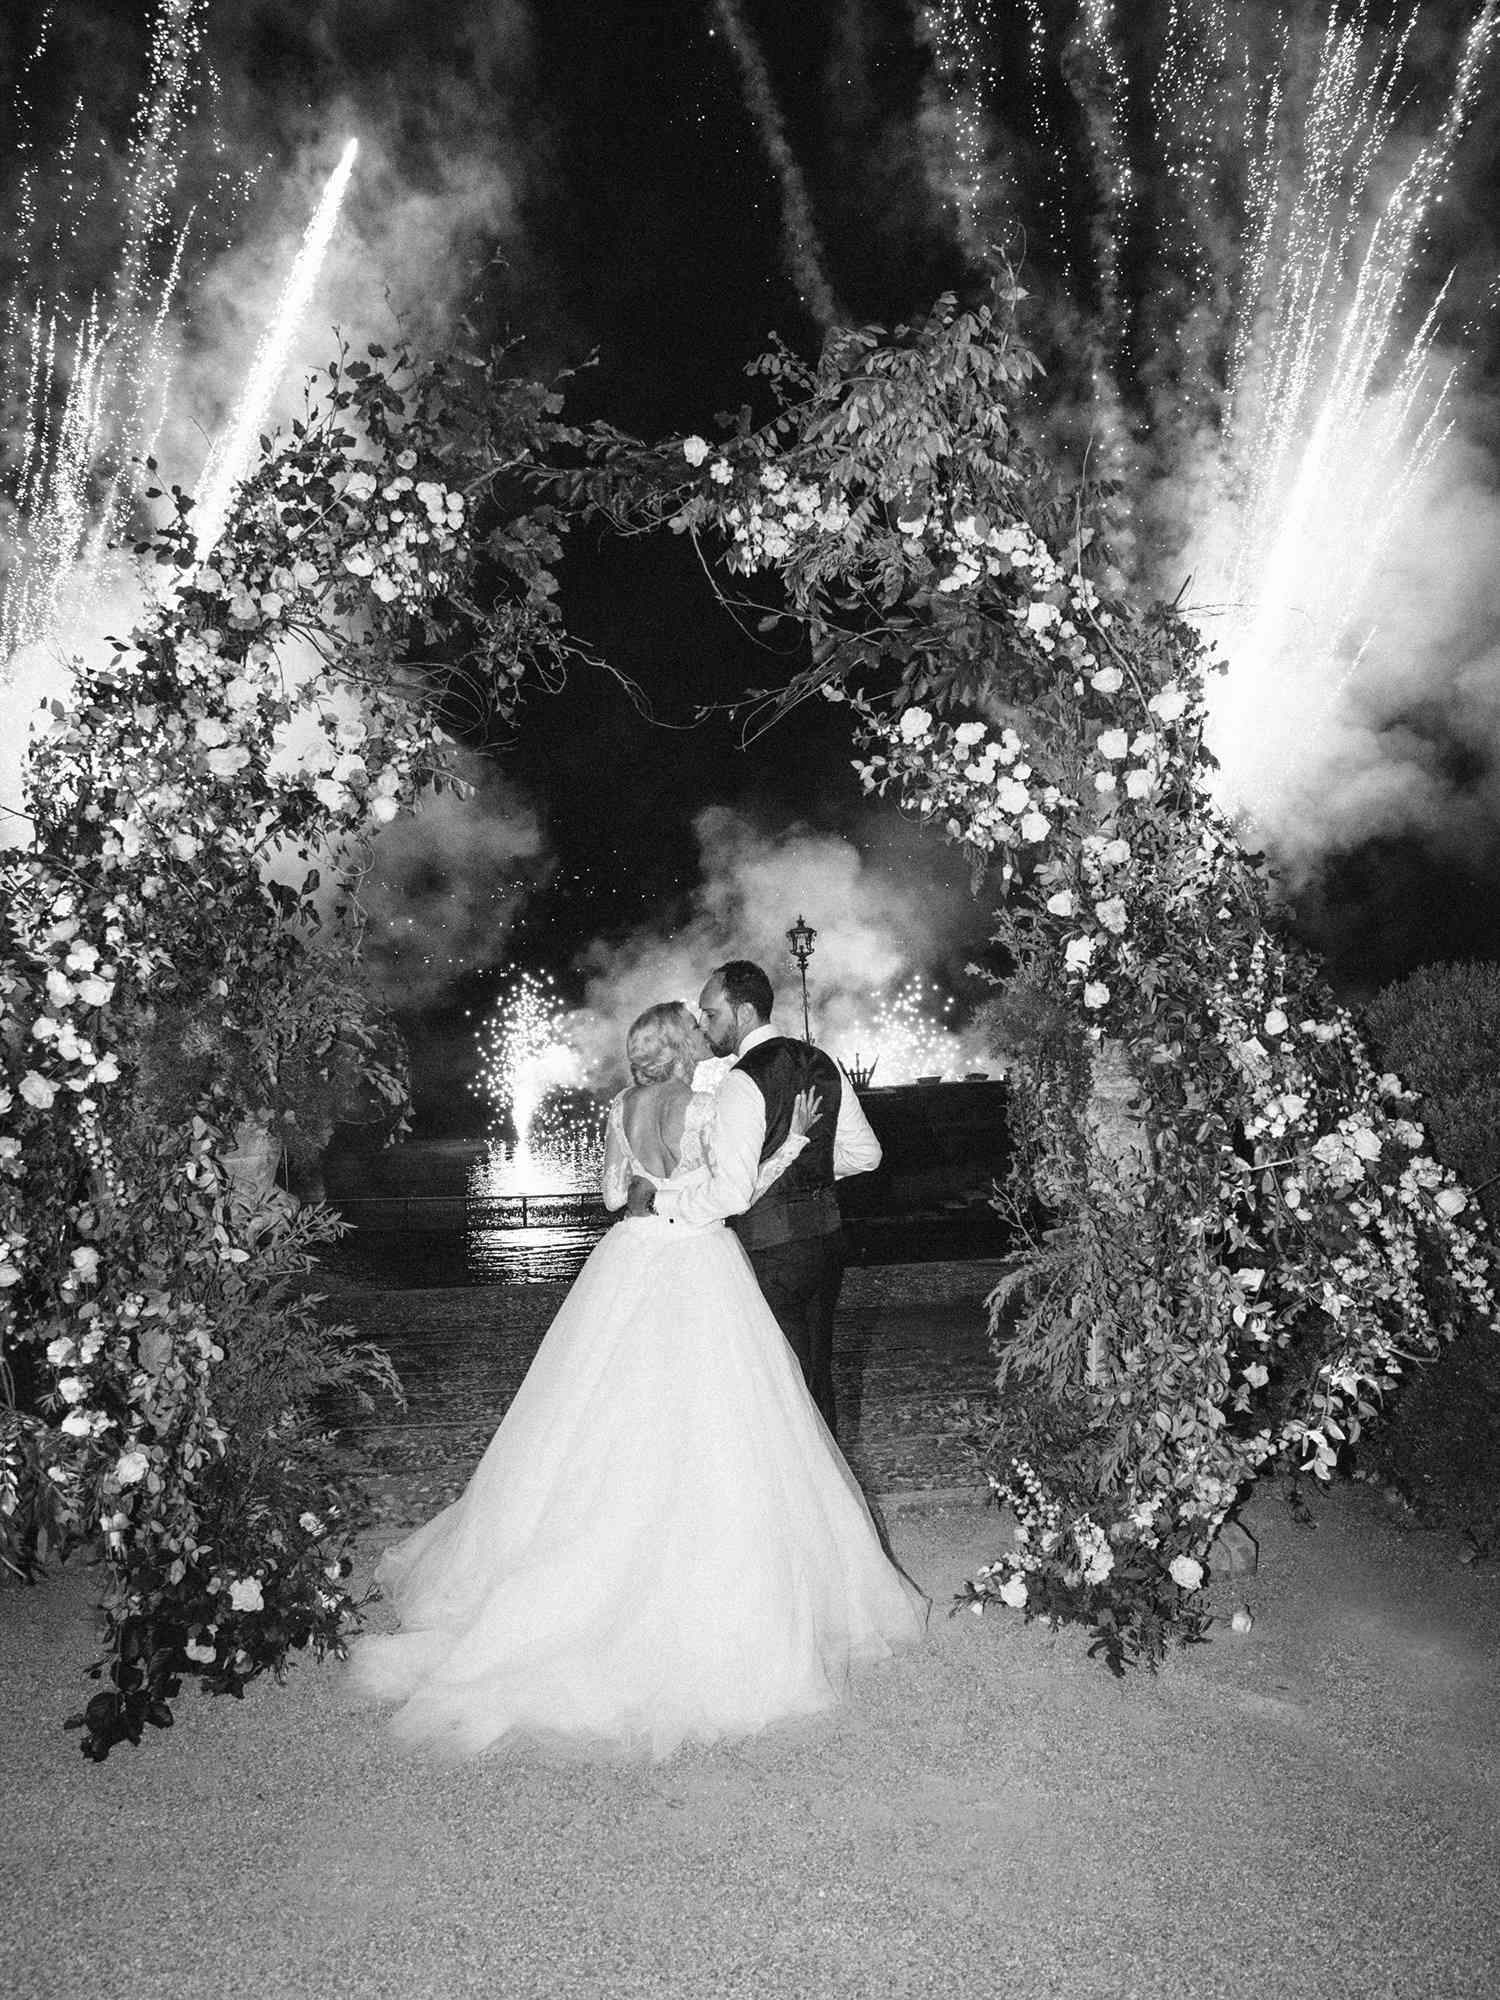 julia mauro wedding couple under fireworks